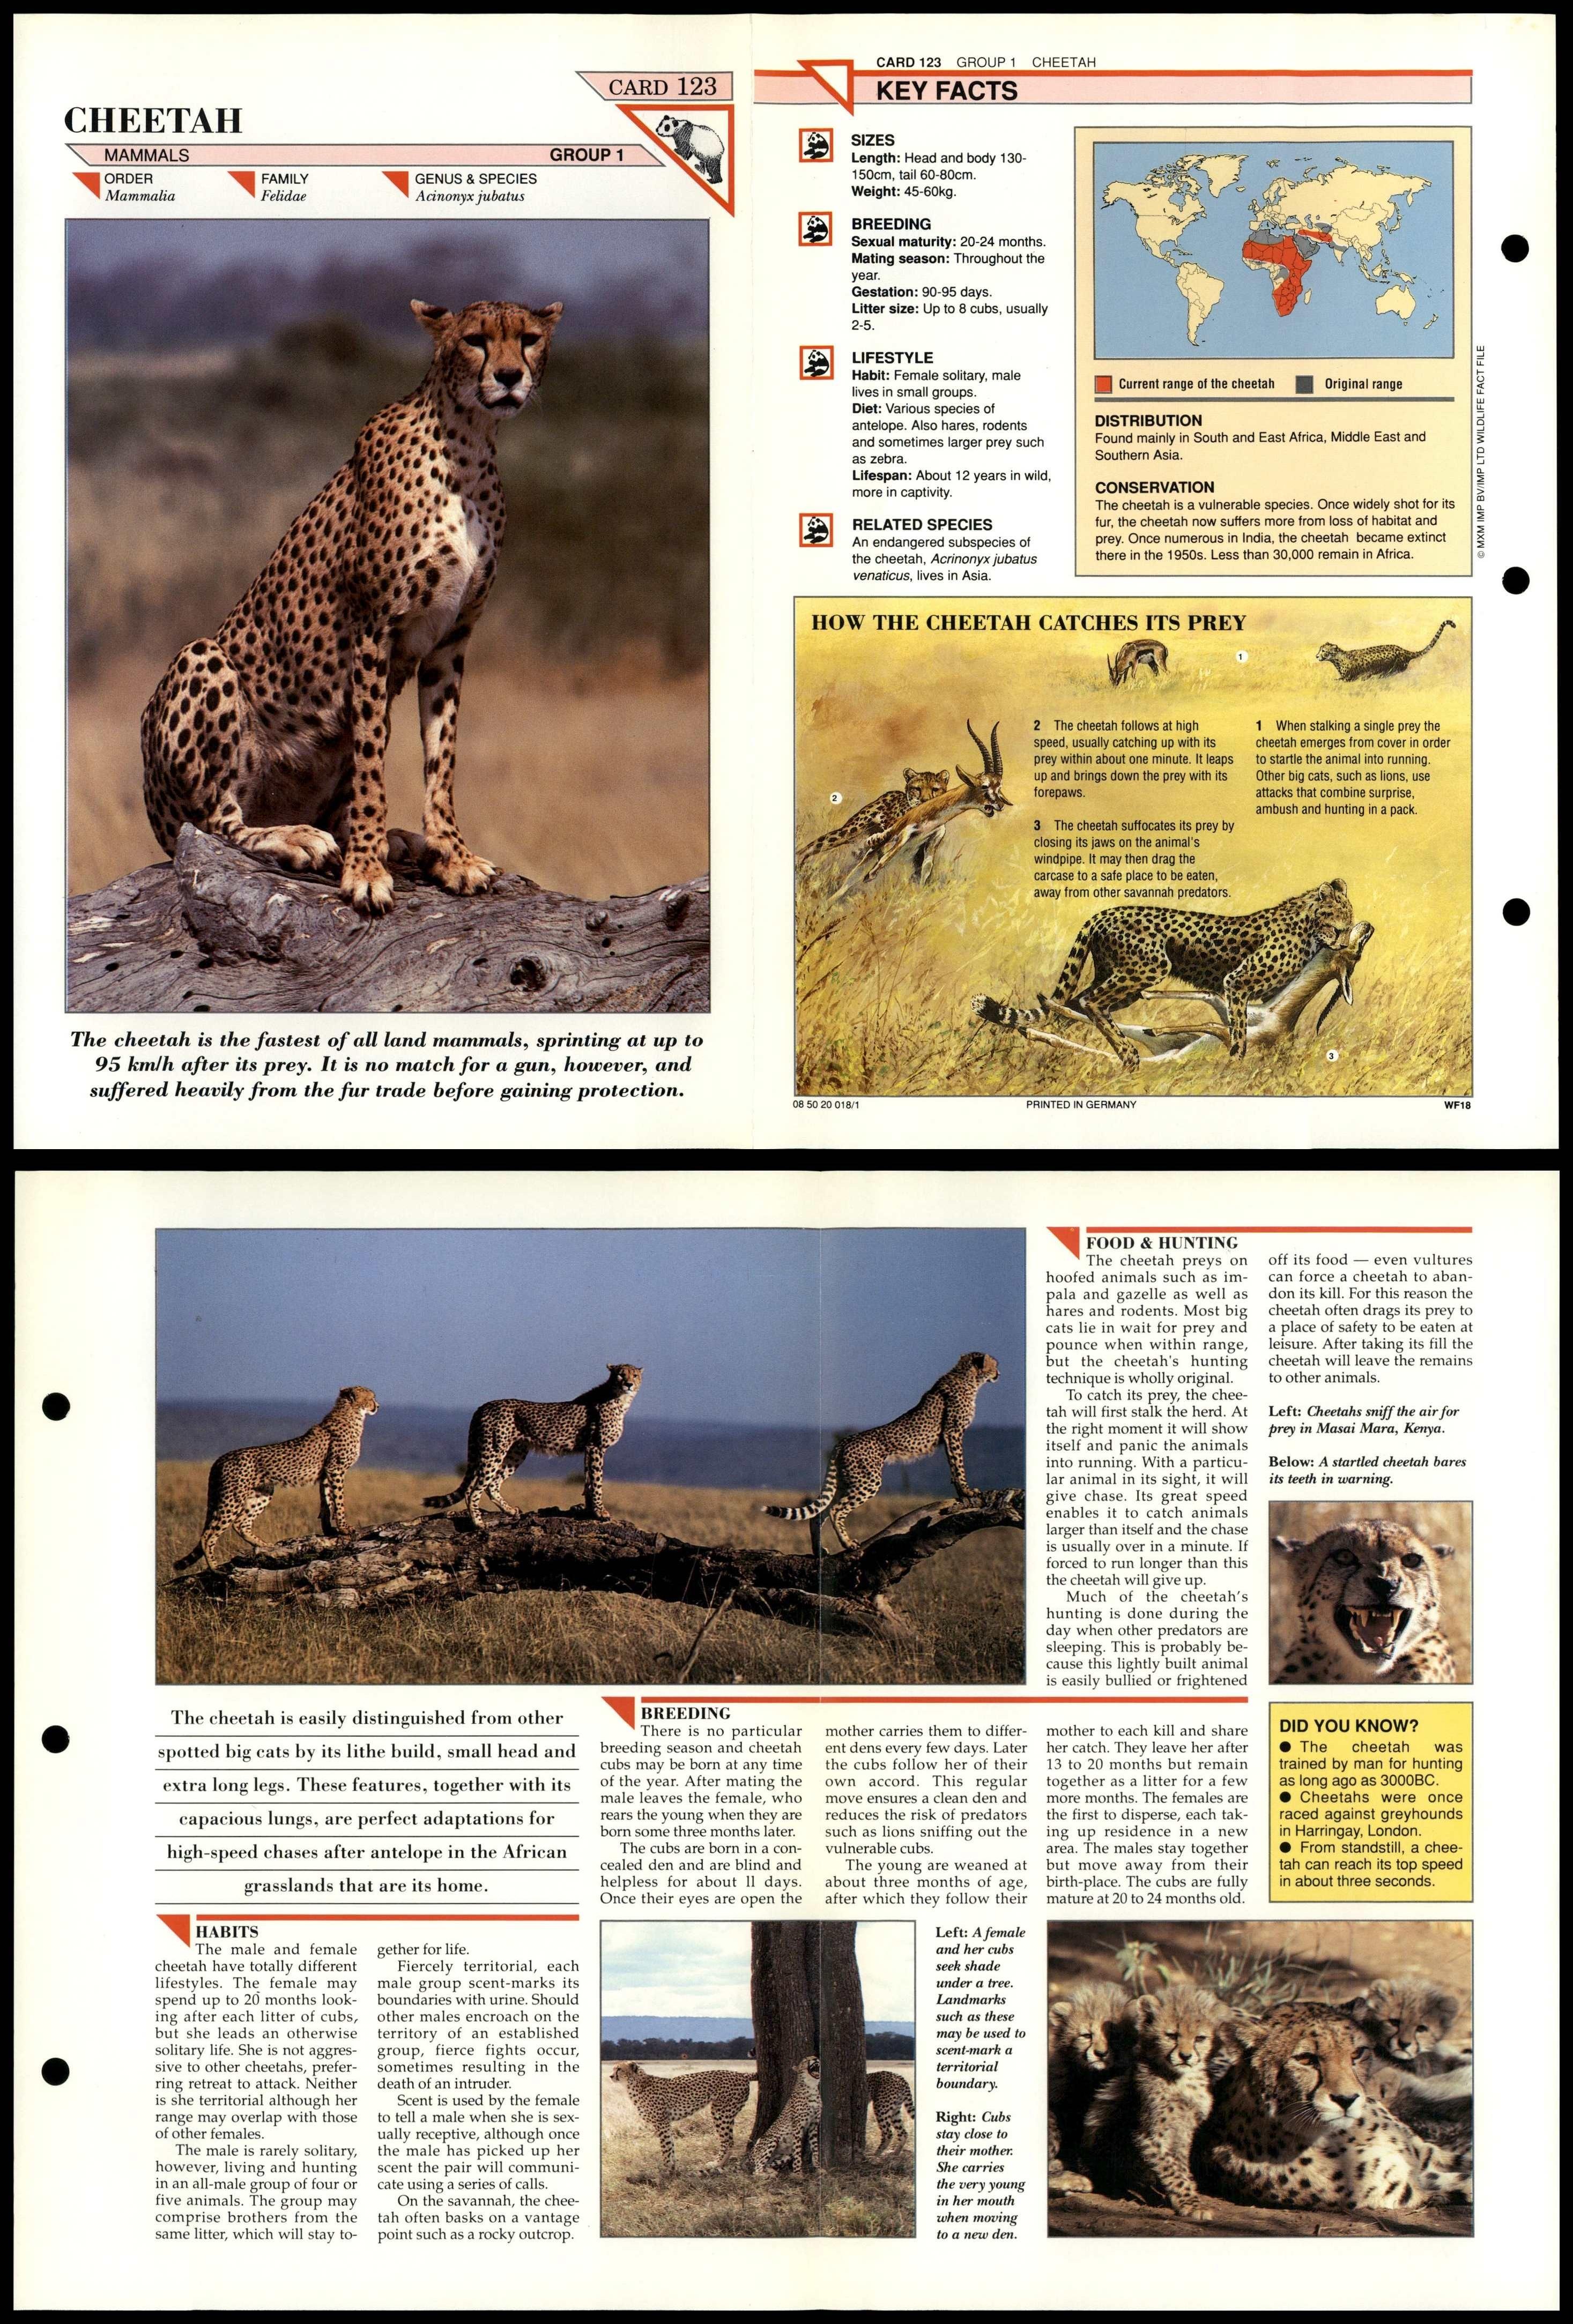 Cheetah #123 Mammals Wildlife Fact File Fold-Out Card